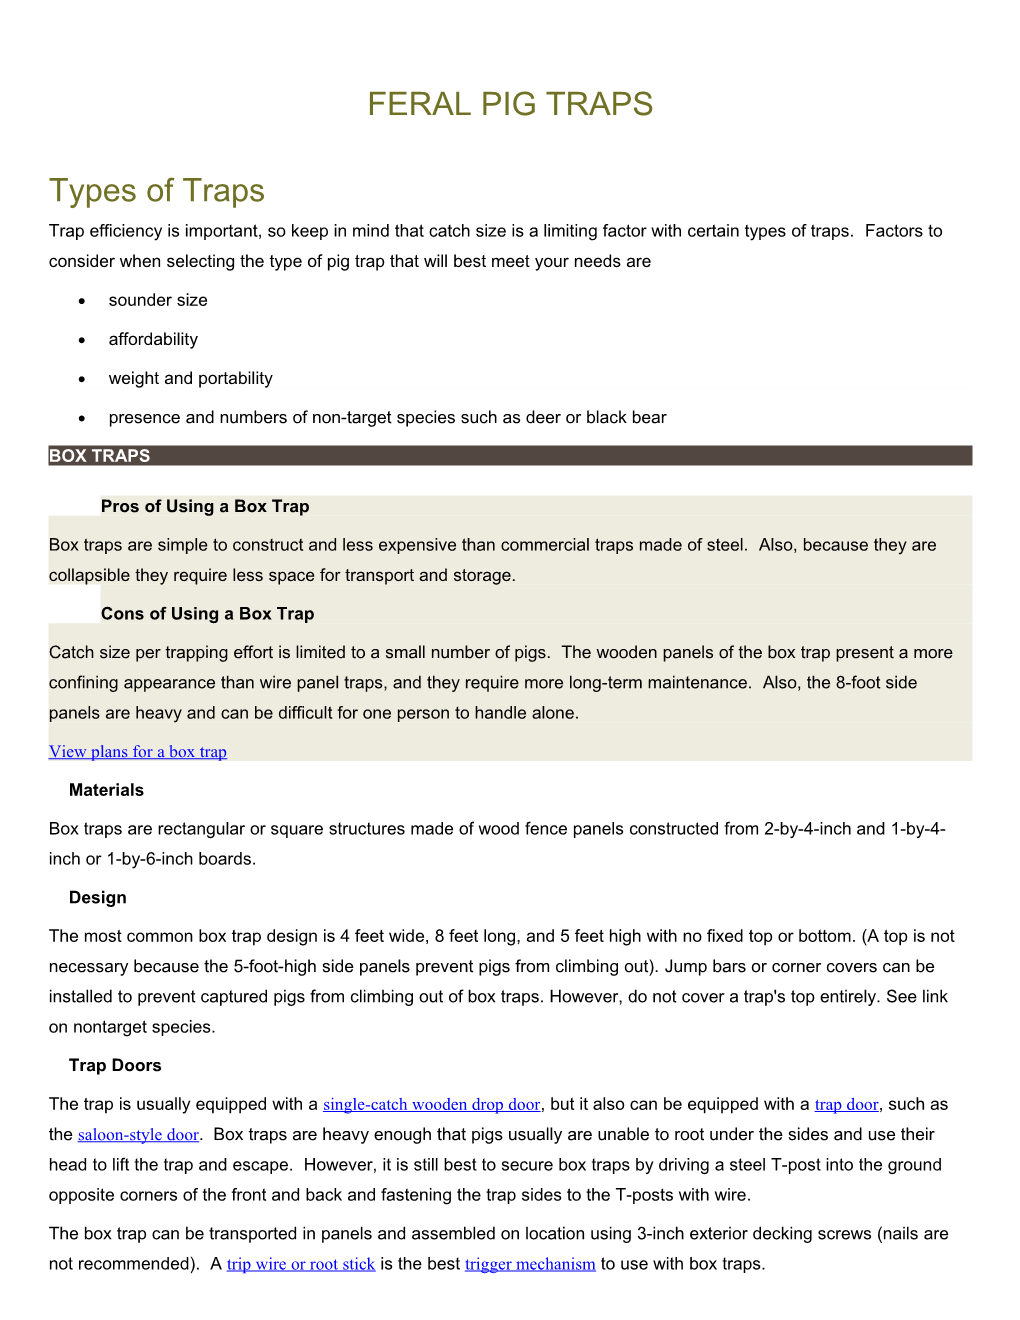 Feral Pig Traps